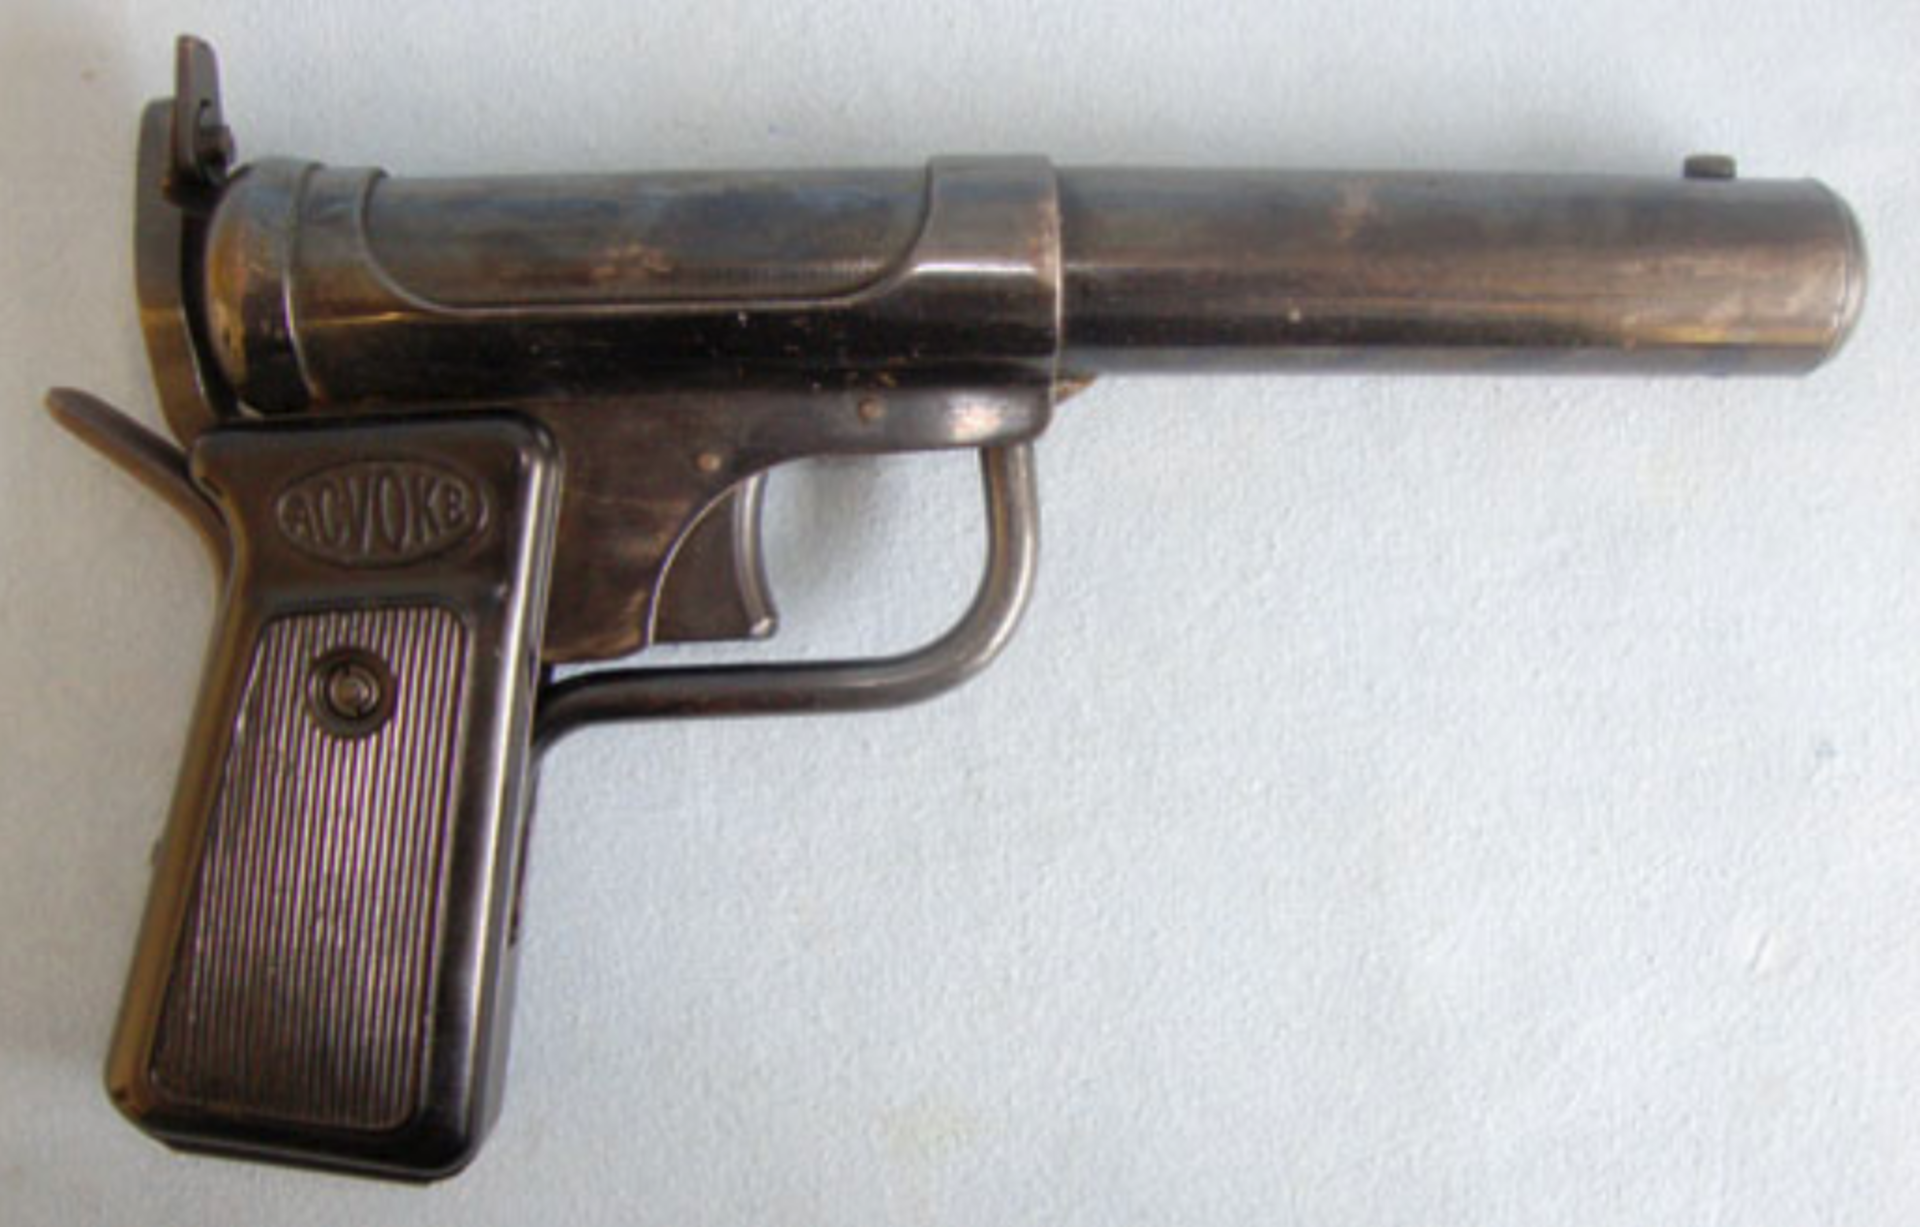 1946-1956 British Accles & Shelvoke Ltd 'Acvoke' Break Action .177 Calibre Air Pistol.